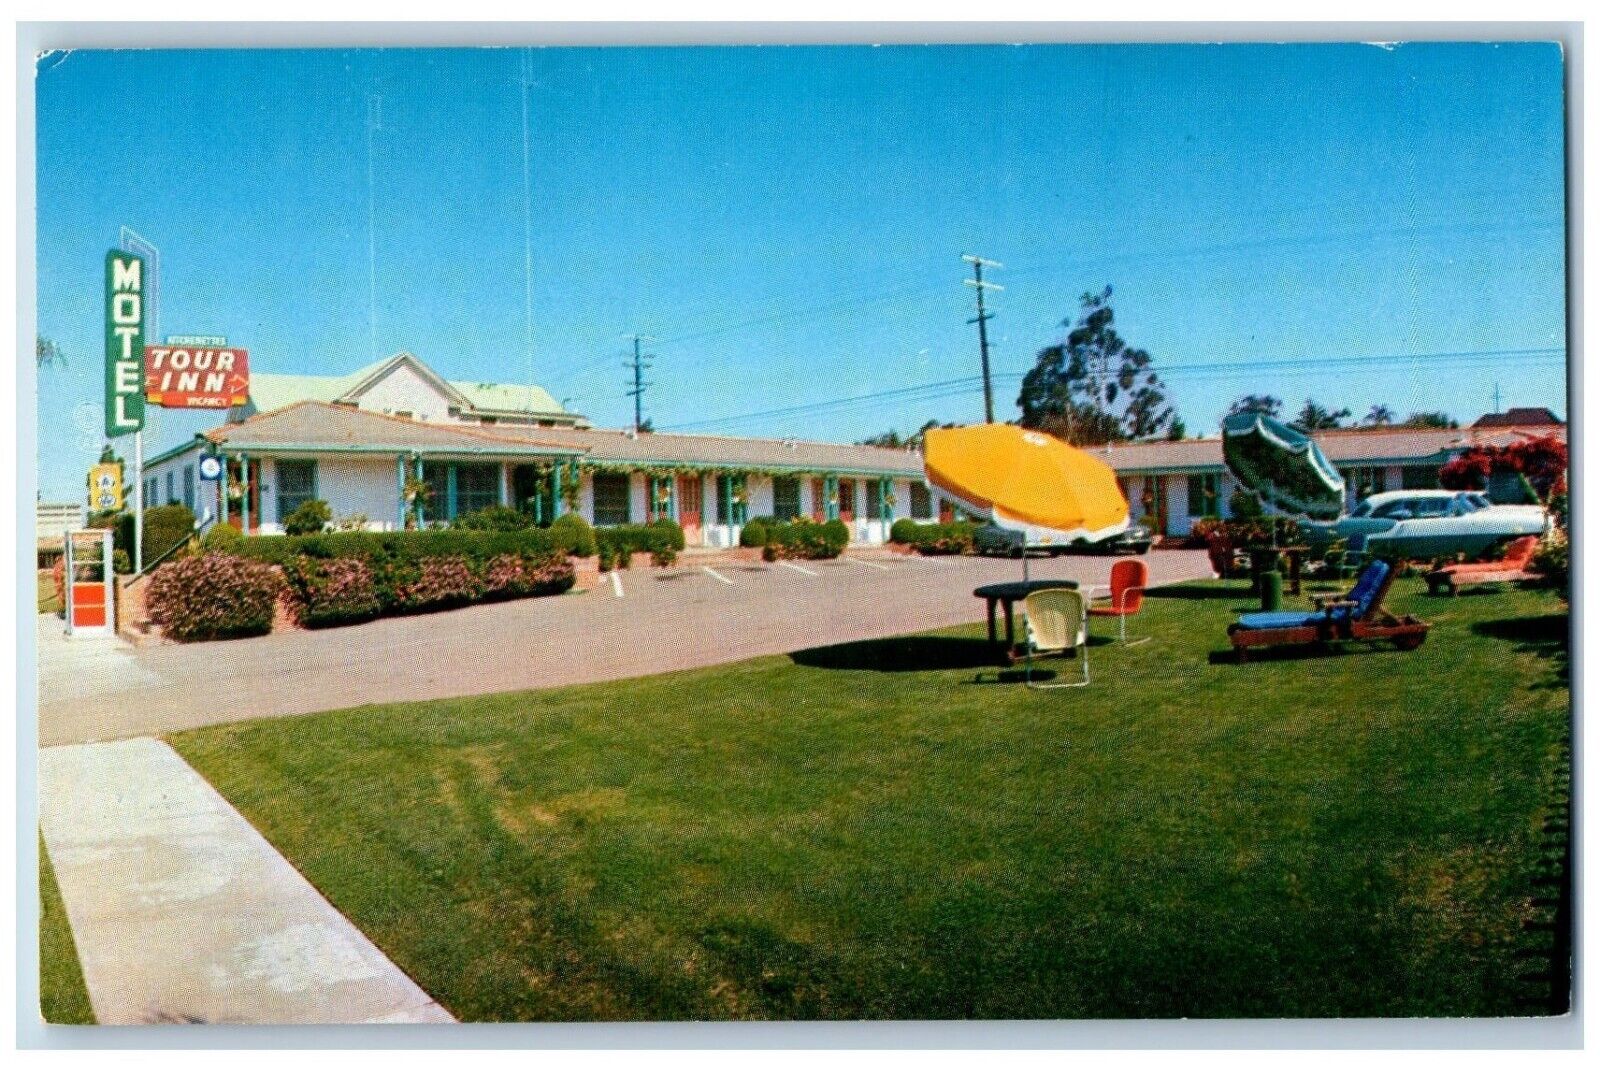 San Diego California CA Postcard Tour Inn Motel El Cajon Boulevard c1960 Vintage